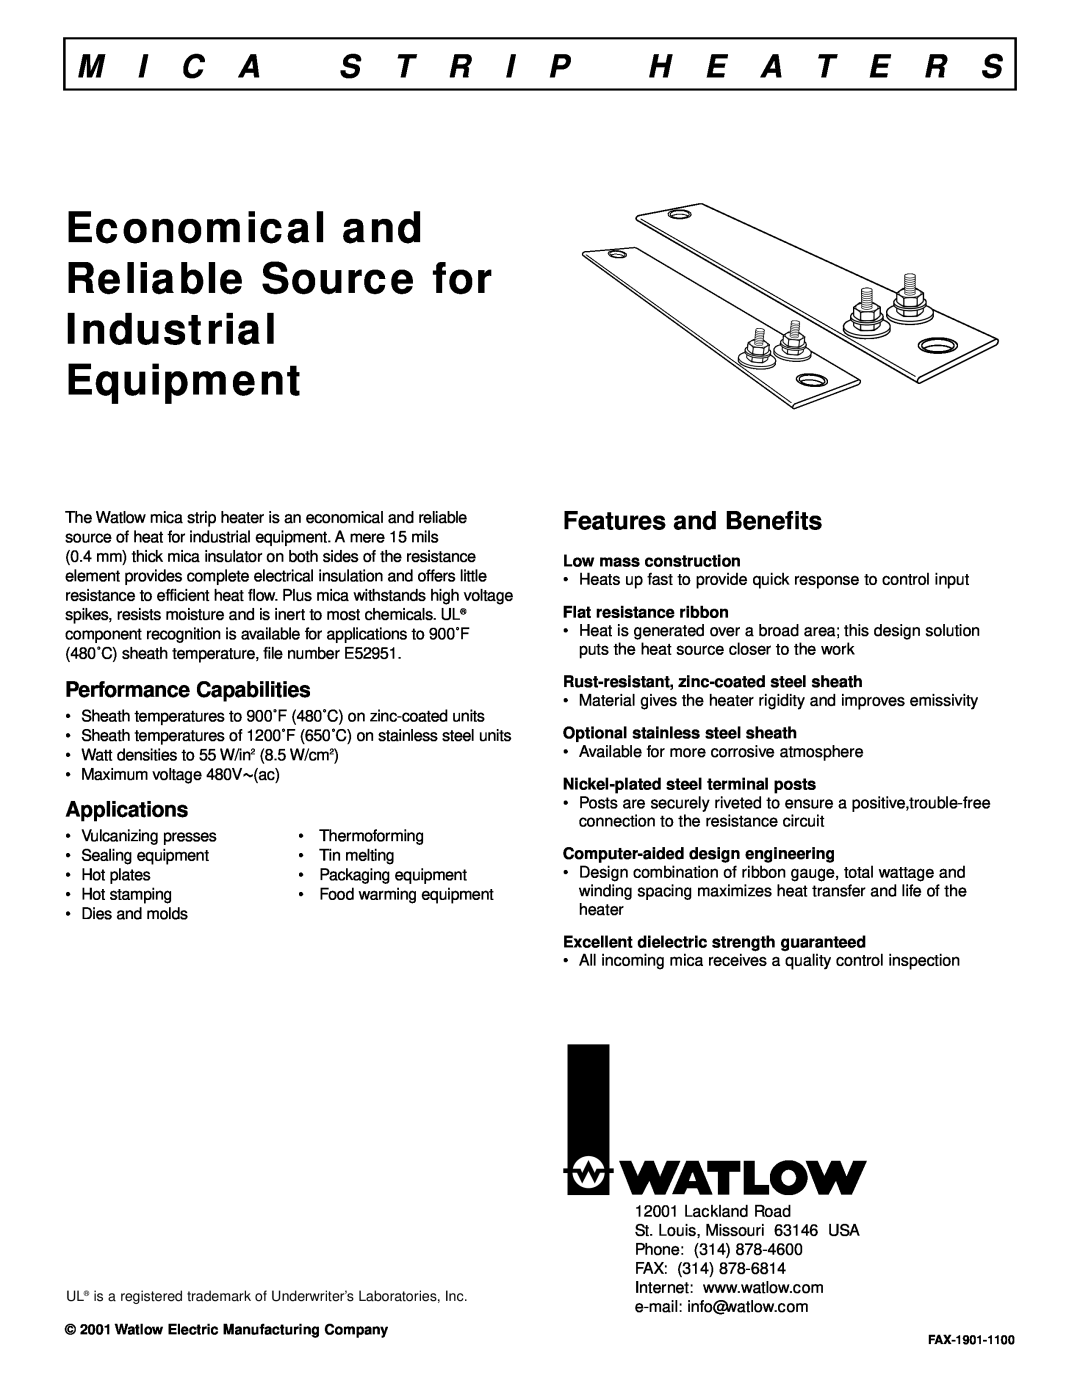 Watlow Electric Mica Strip Heater manual M I C A S T R I P H E A T E R S, Performance Capabilities, Applications 